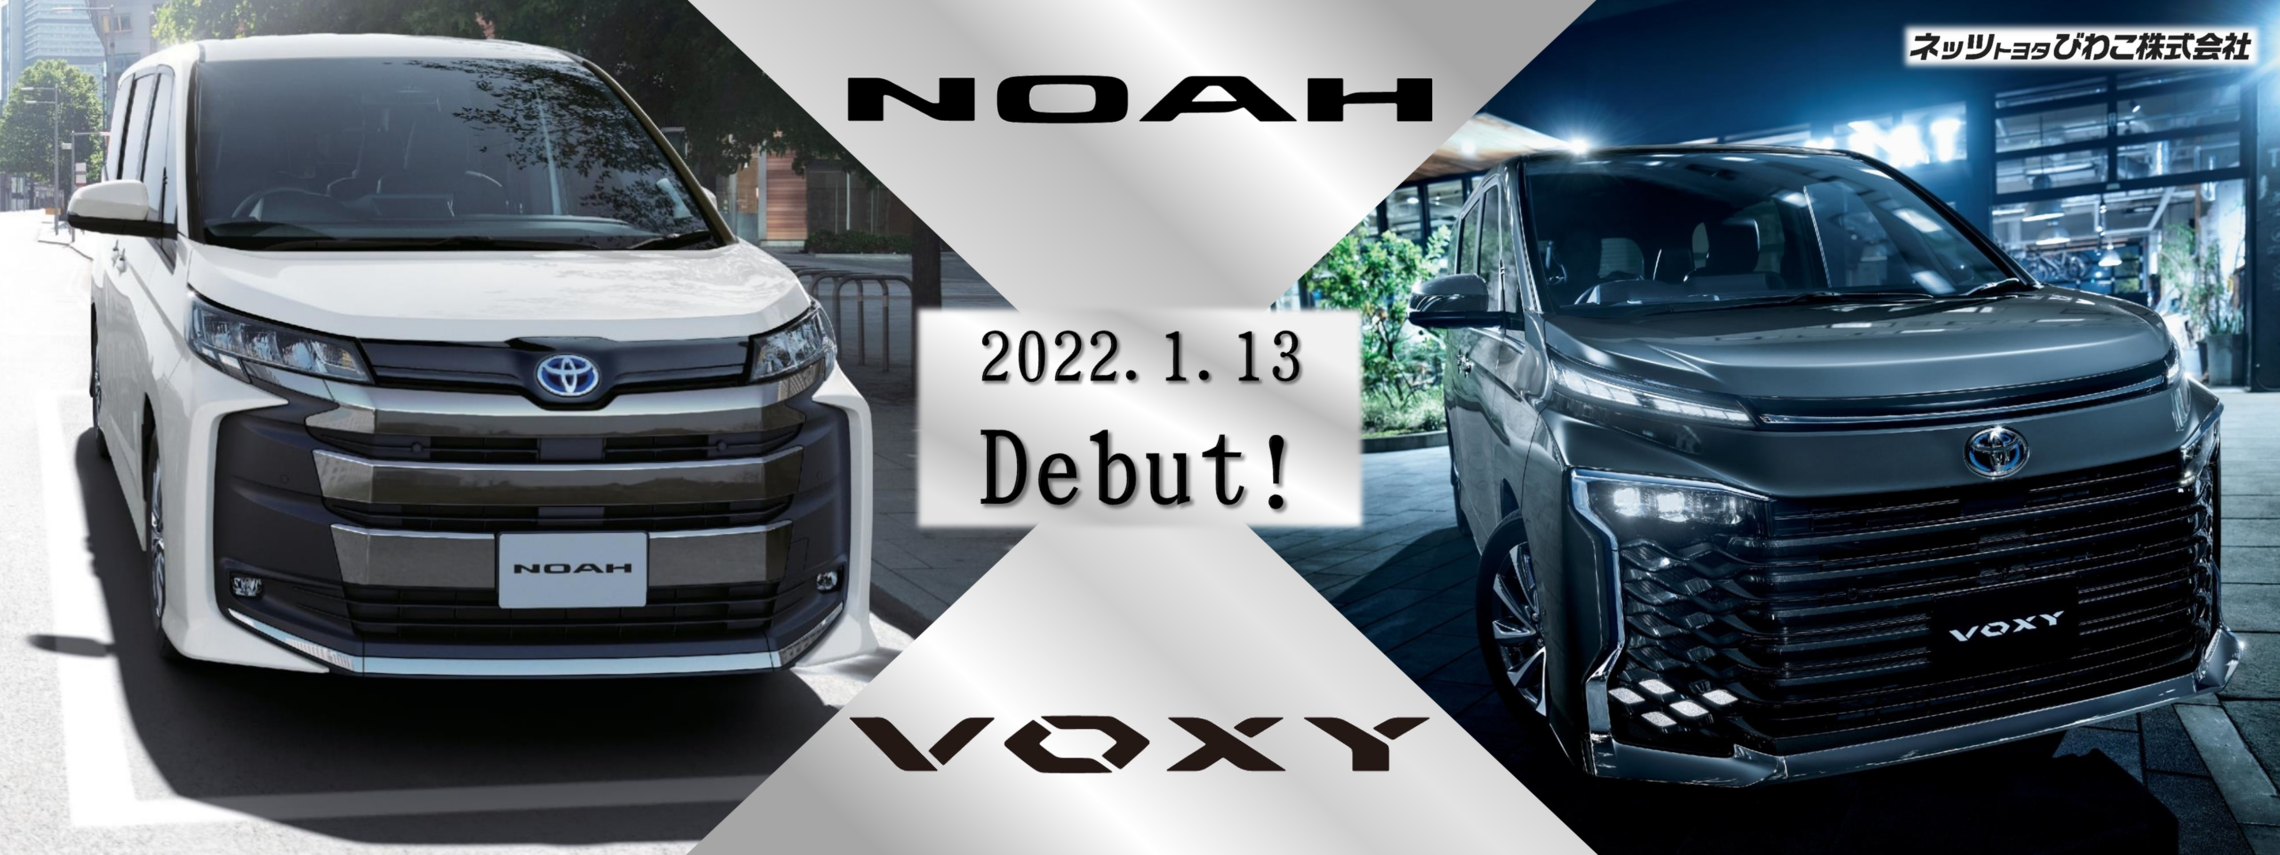 NOAH VOXY